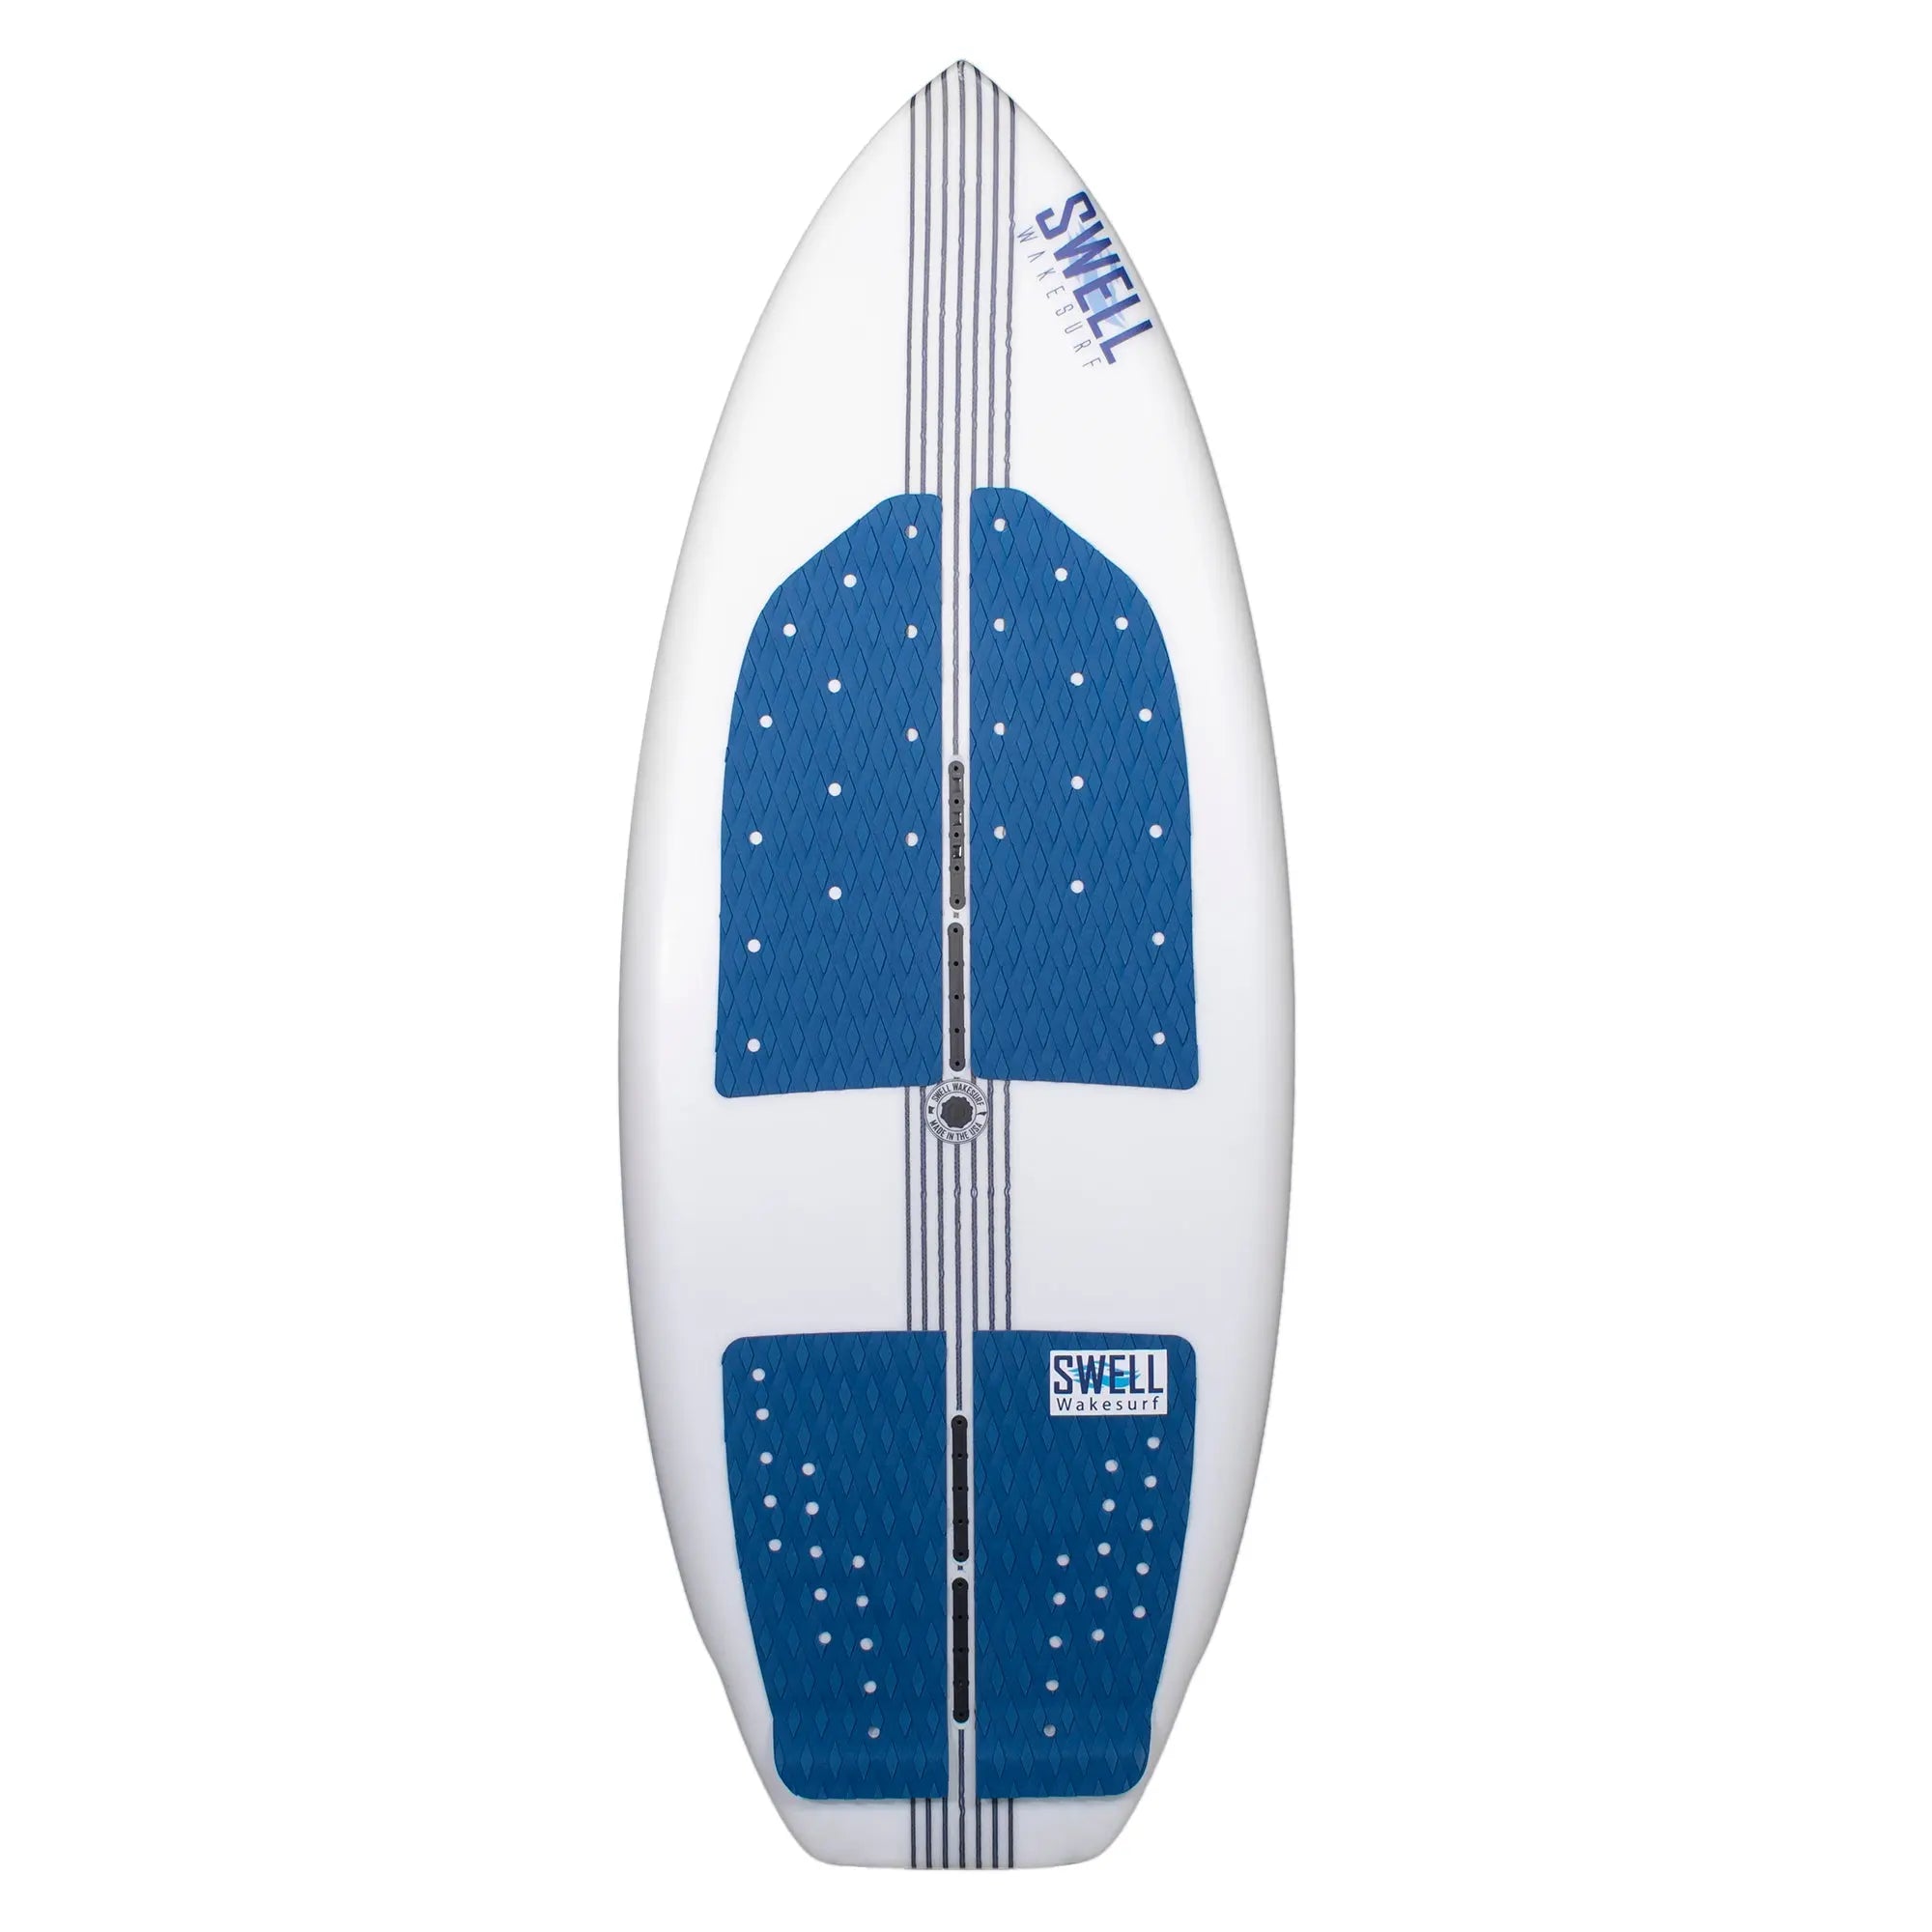 SWELL Wakesurf - Shasta Surfboard - Handmade in The USA SWELL Wakesurf